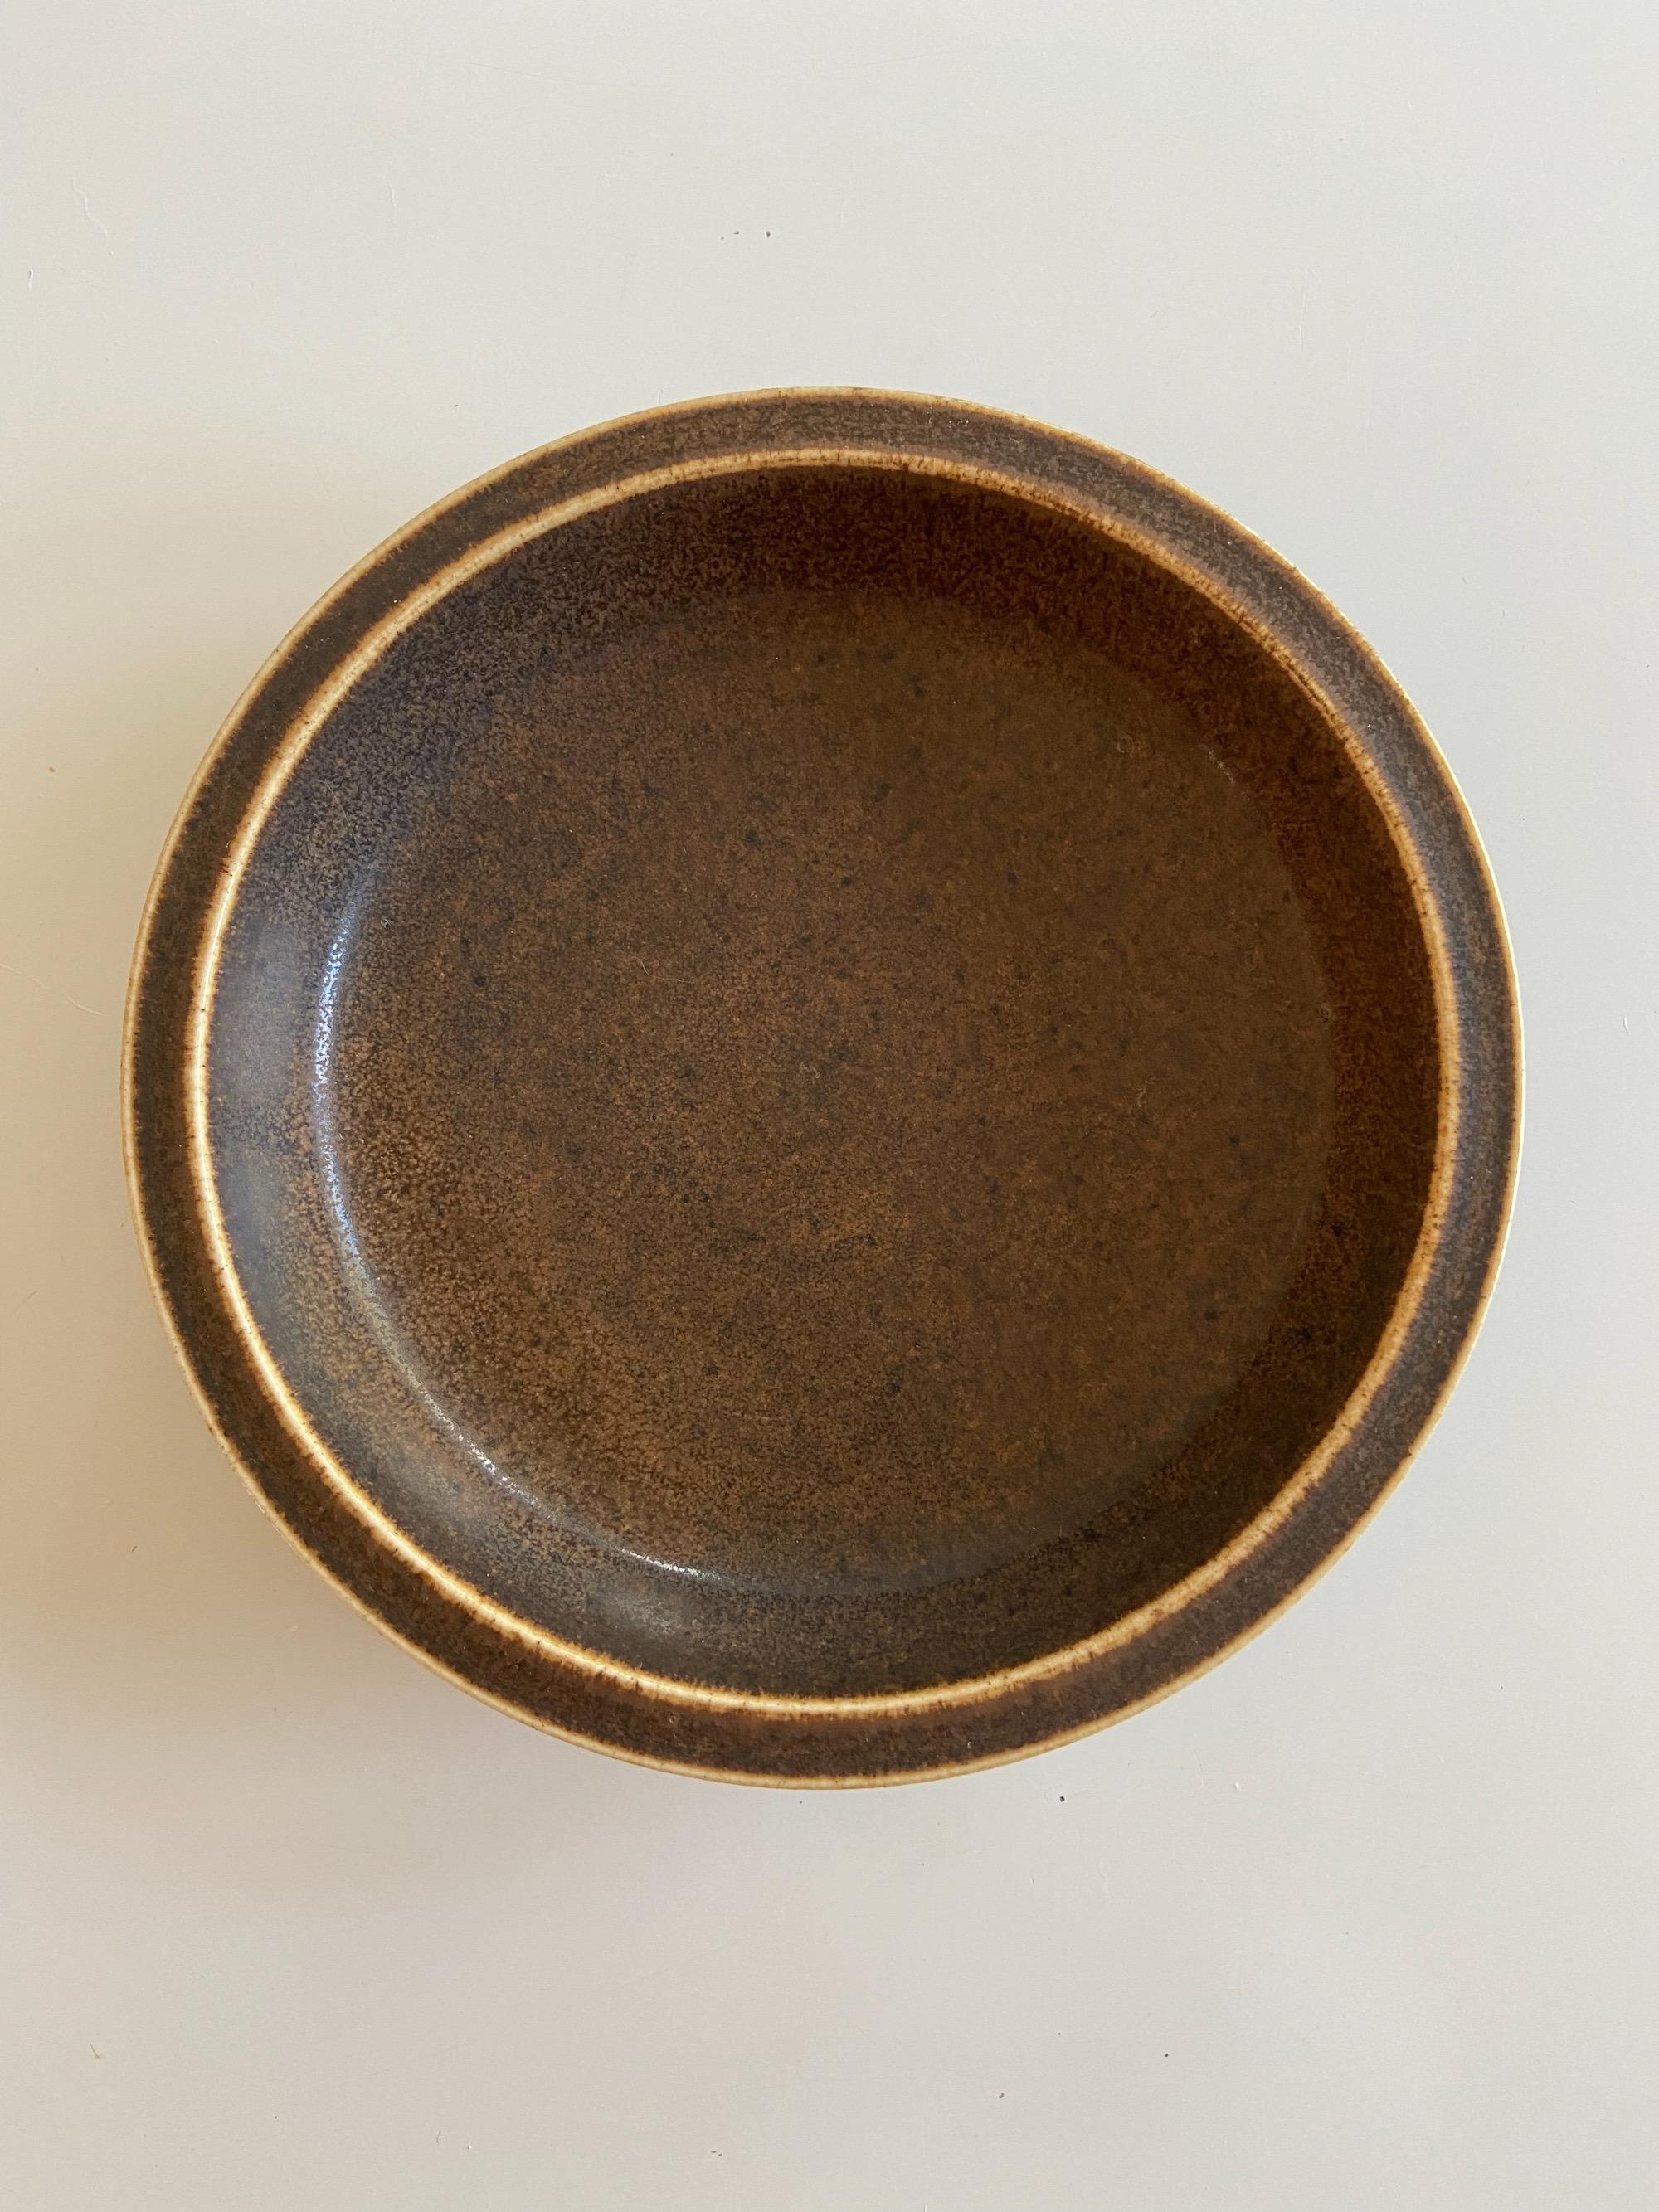 Saxbo Yin yang stamp No. 66 ceramic dish or bowl brown glaze.
 